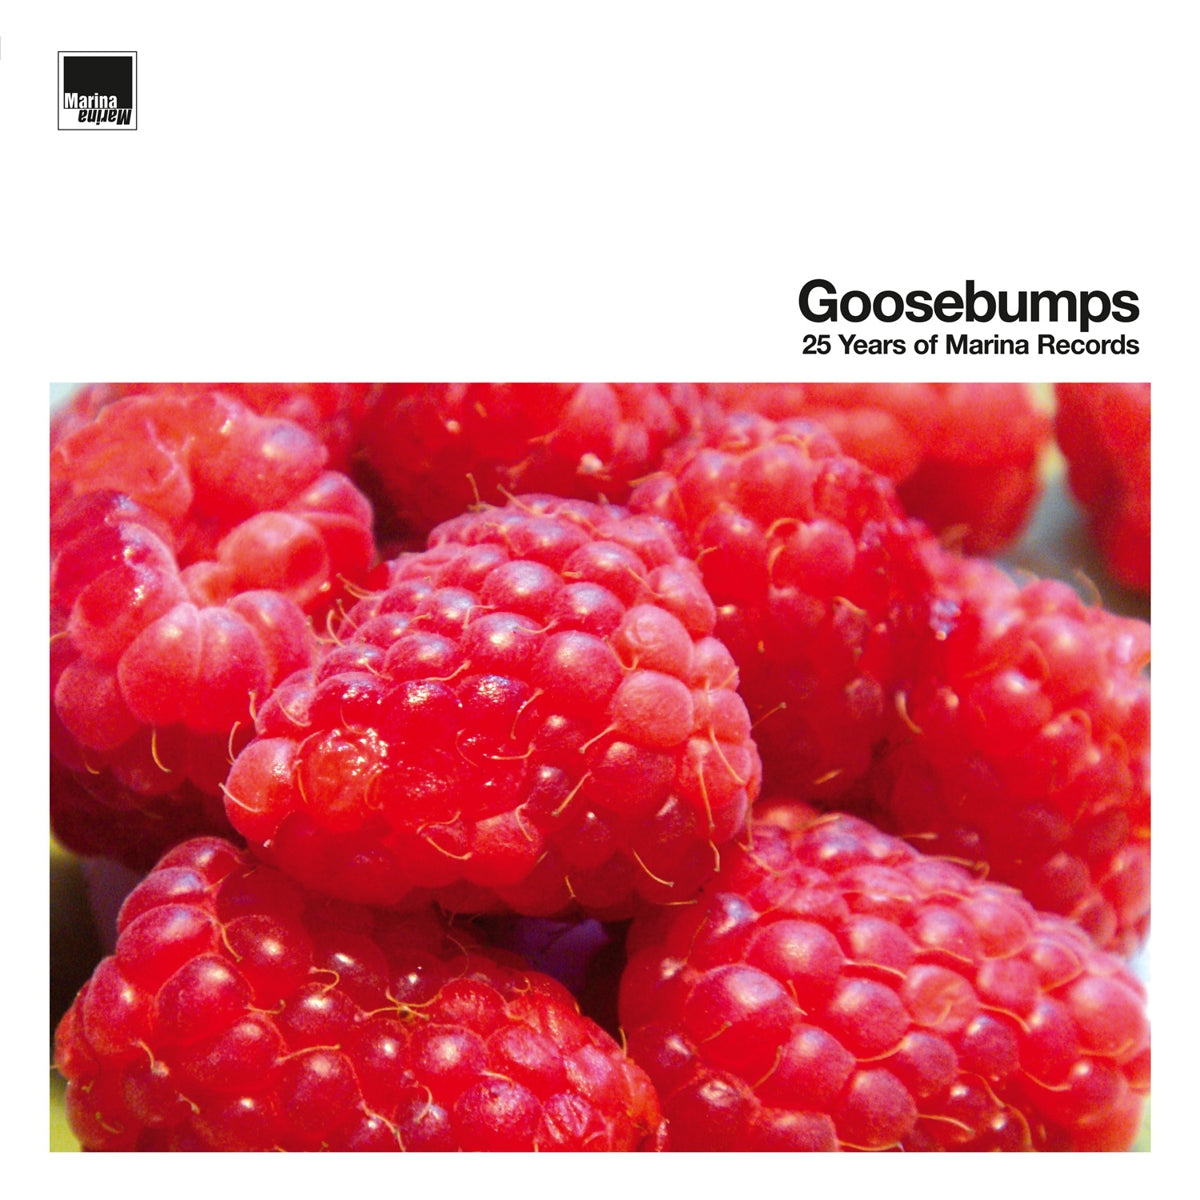 V/A - Goosebumps - 25 years of Marina Records - 3LP